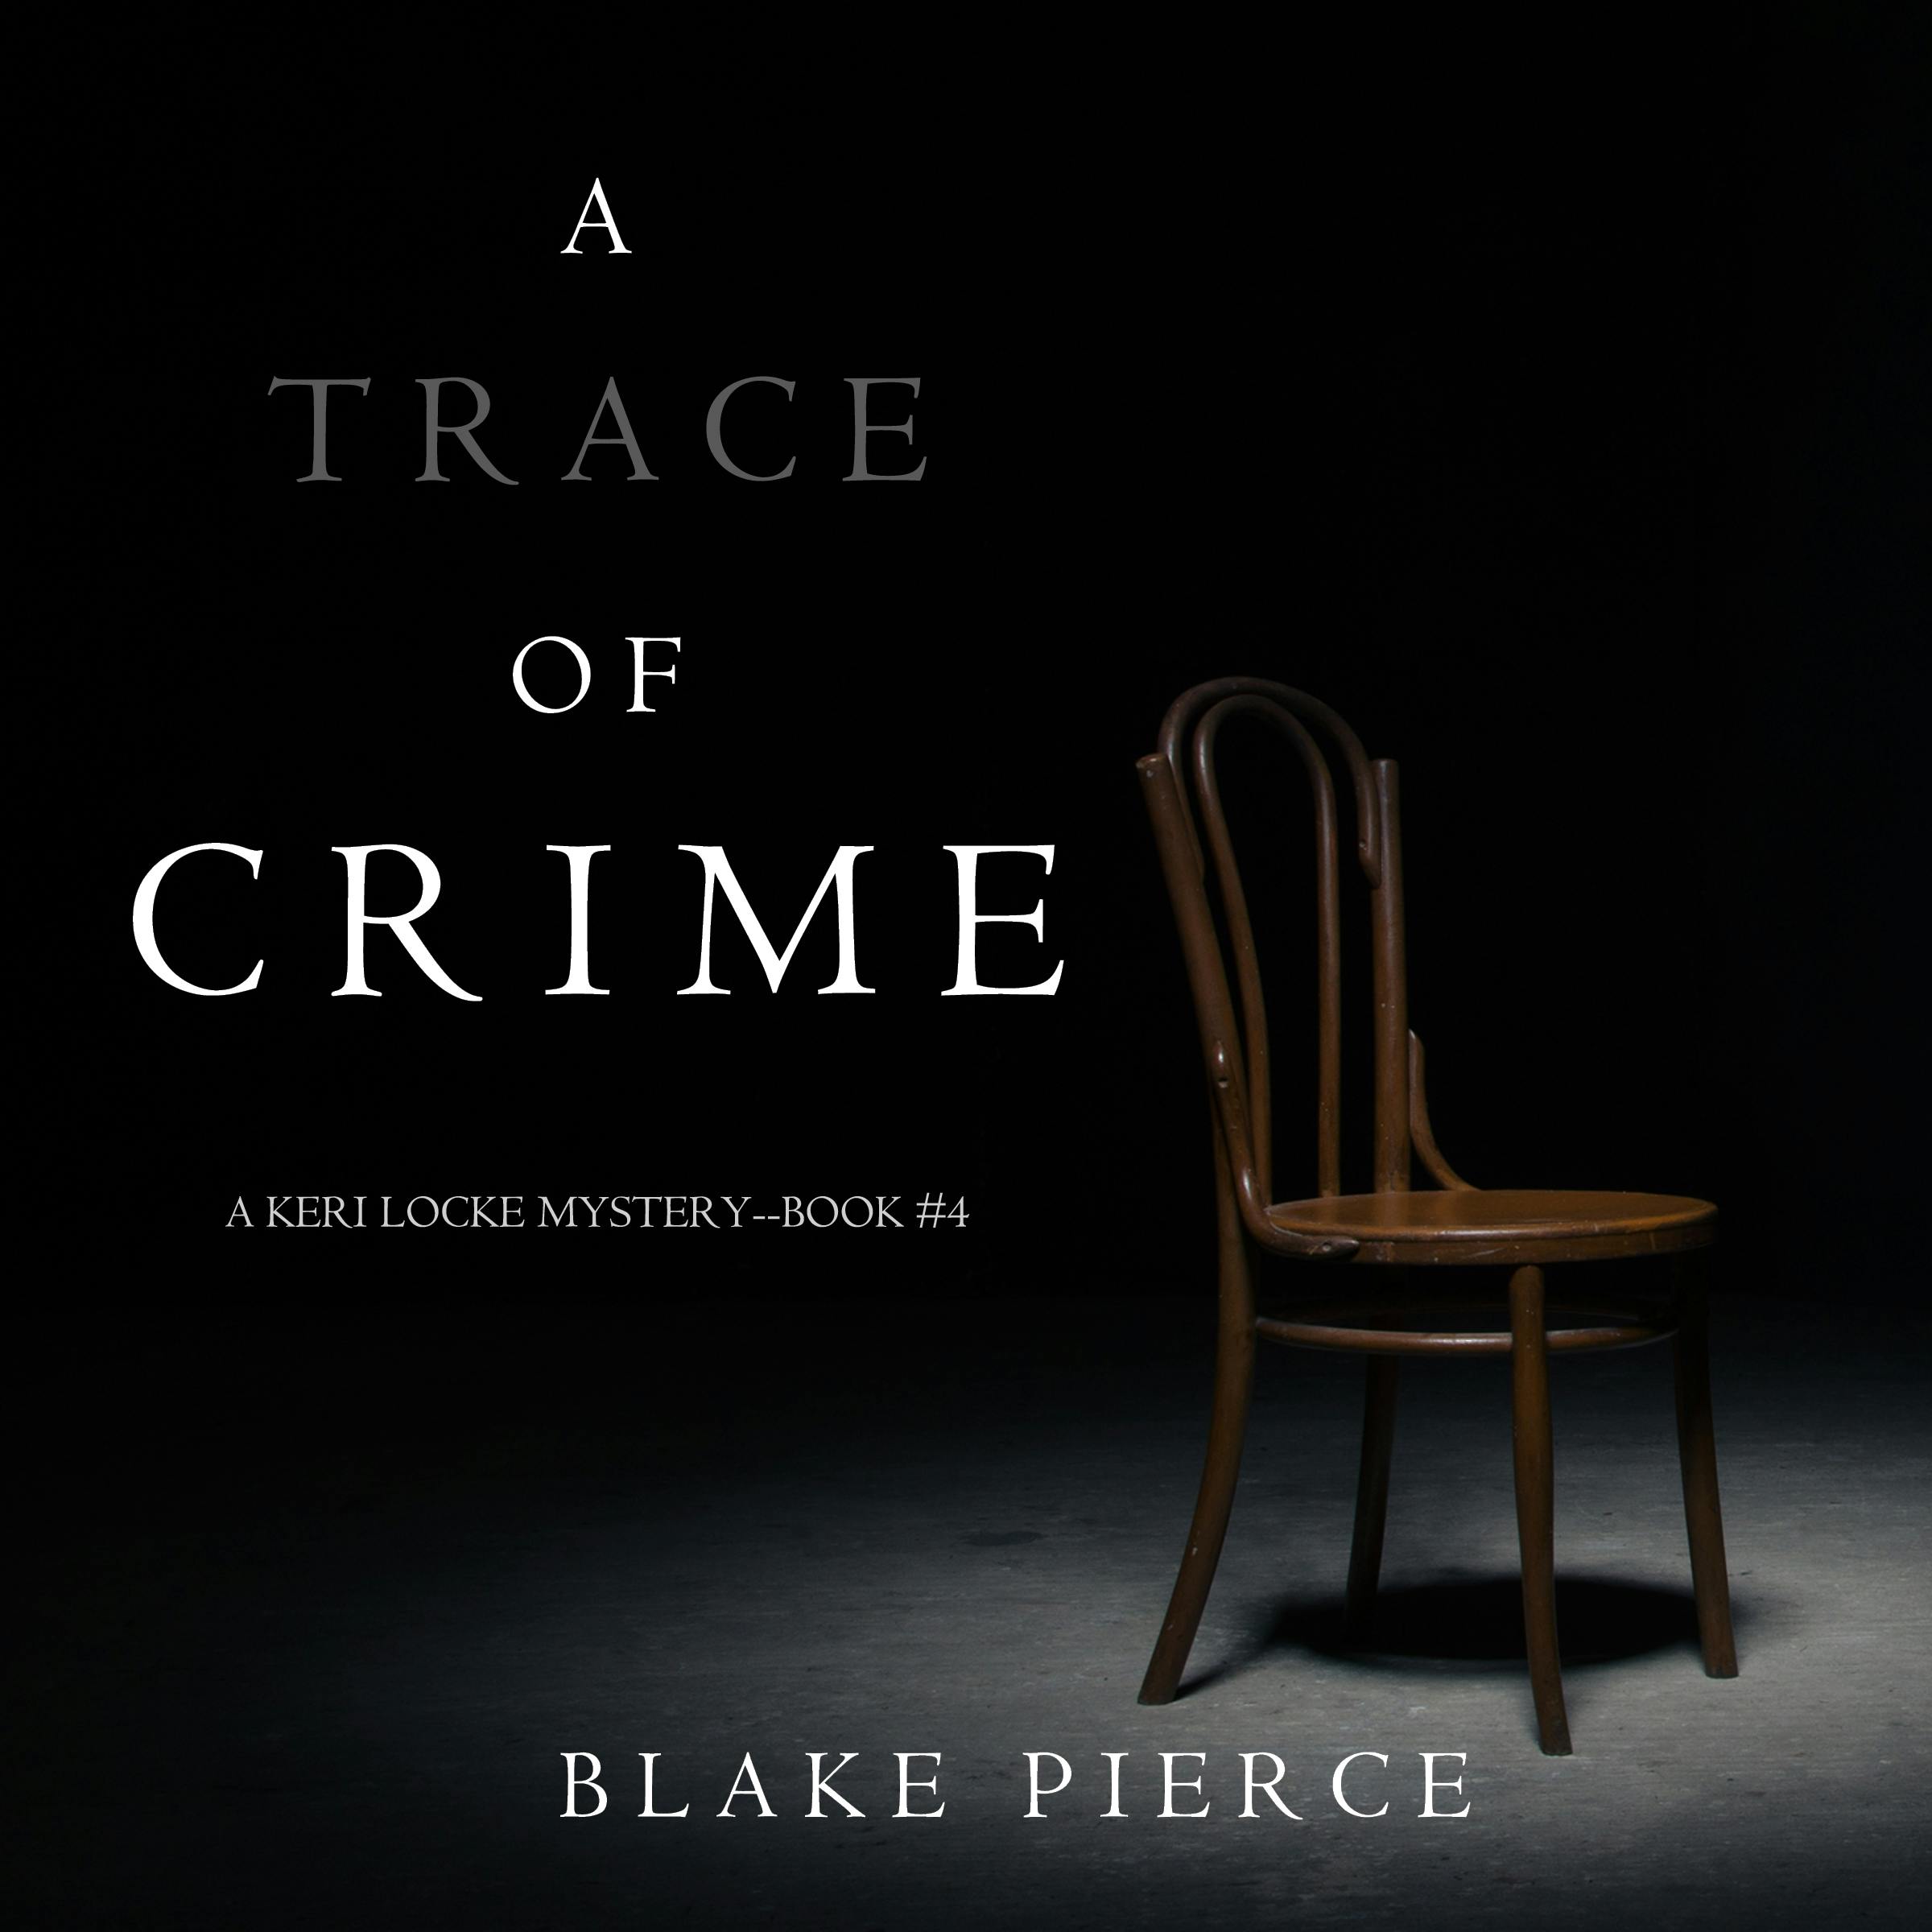 A Trace of Crime (a Keri Locke Mystery--Book #4) - Blake Pierce